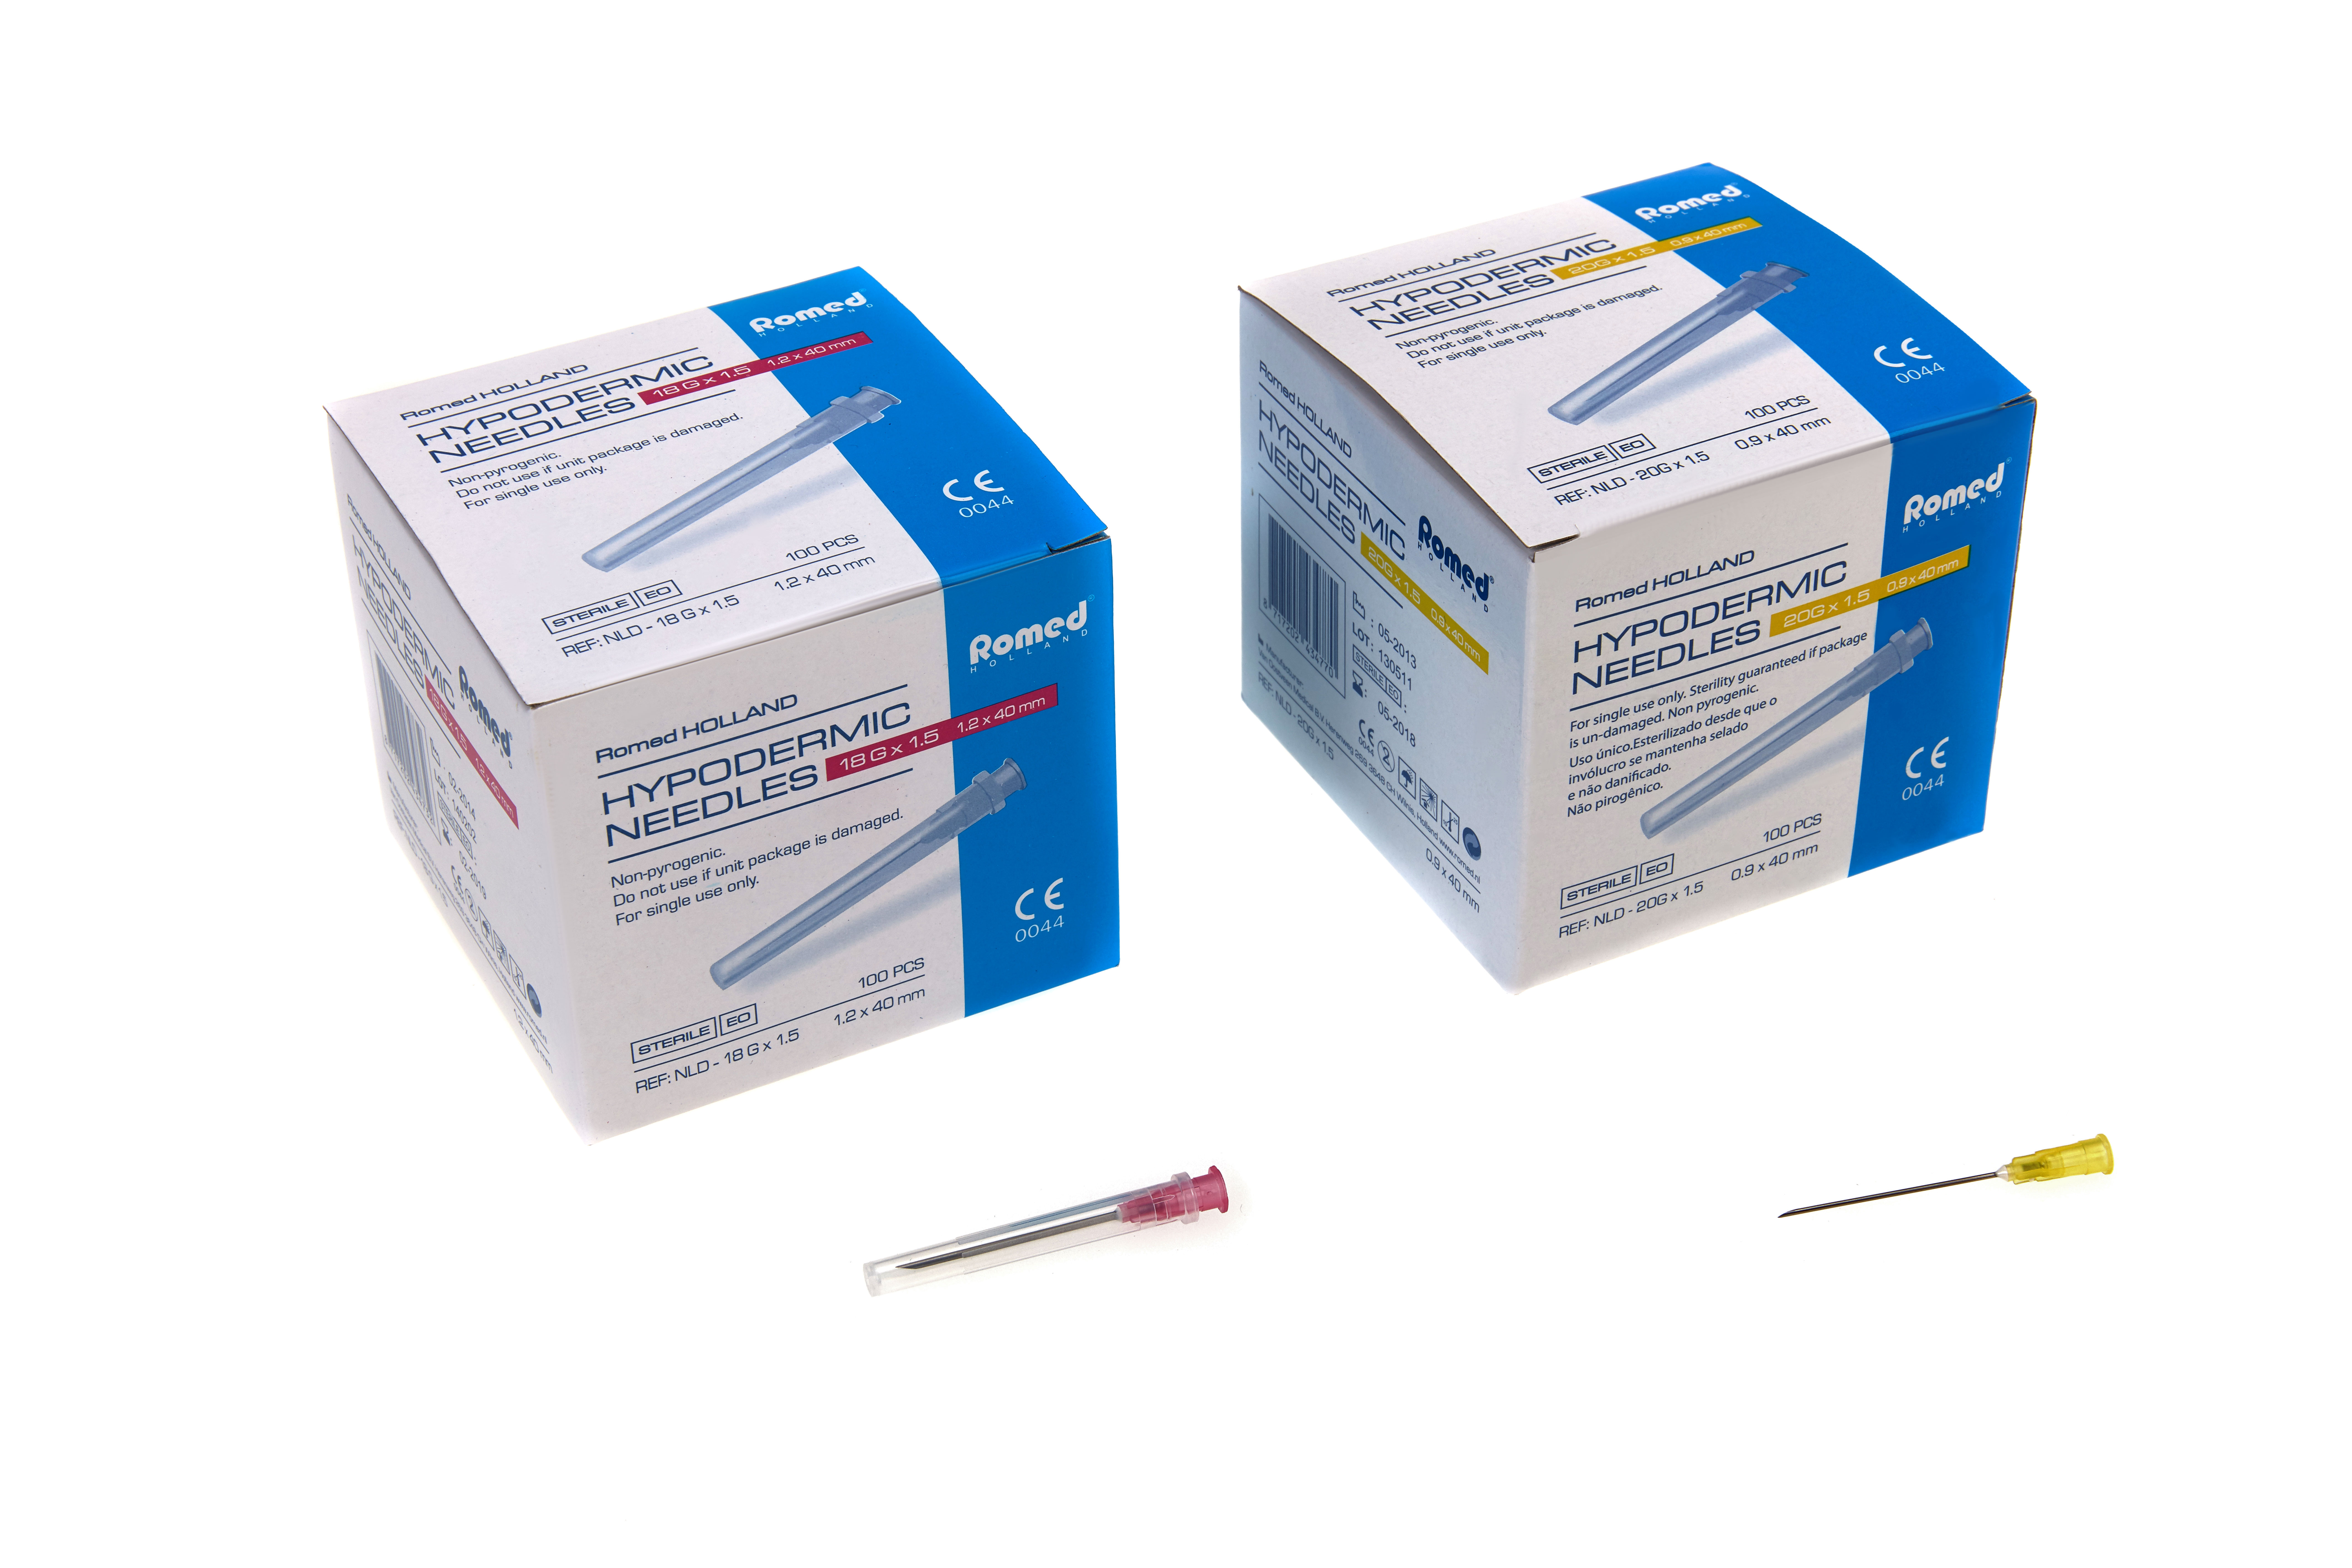 NLD-21GX1.5 Romed hypodermic needles, 21gx1.5", sterile per piece, 100 pcs in an inner box, 50 x 100 pcs = 5.000 pcs in a carton.